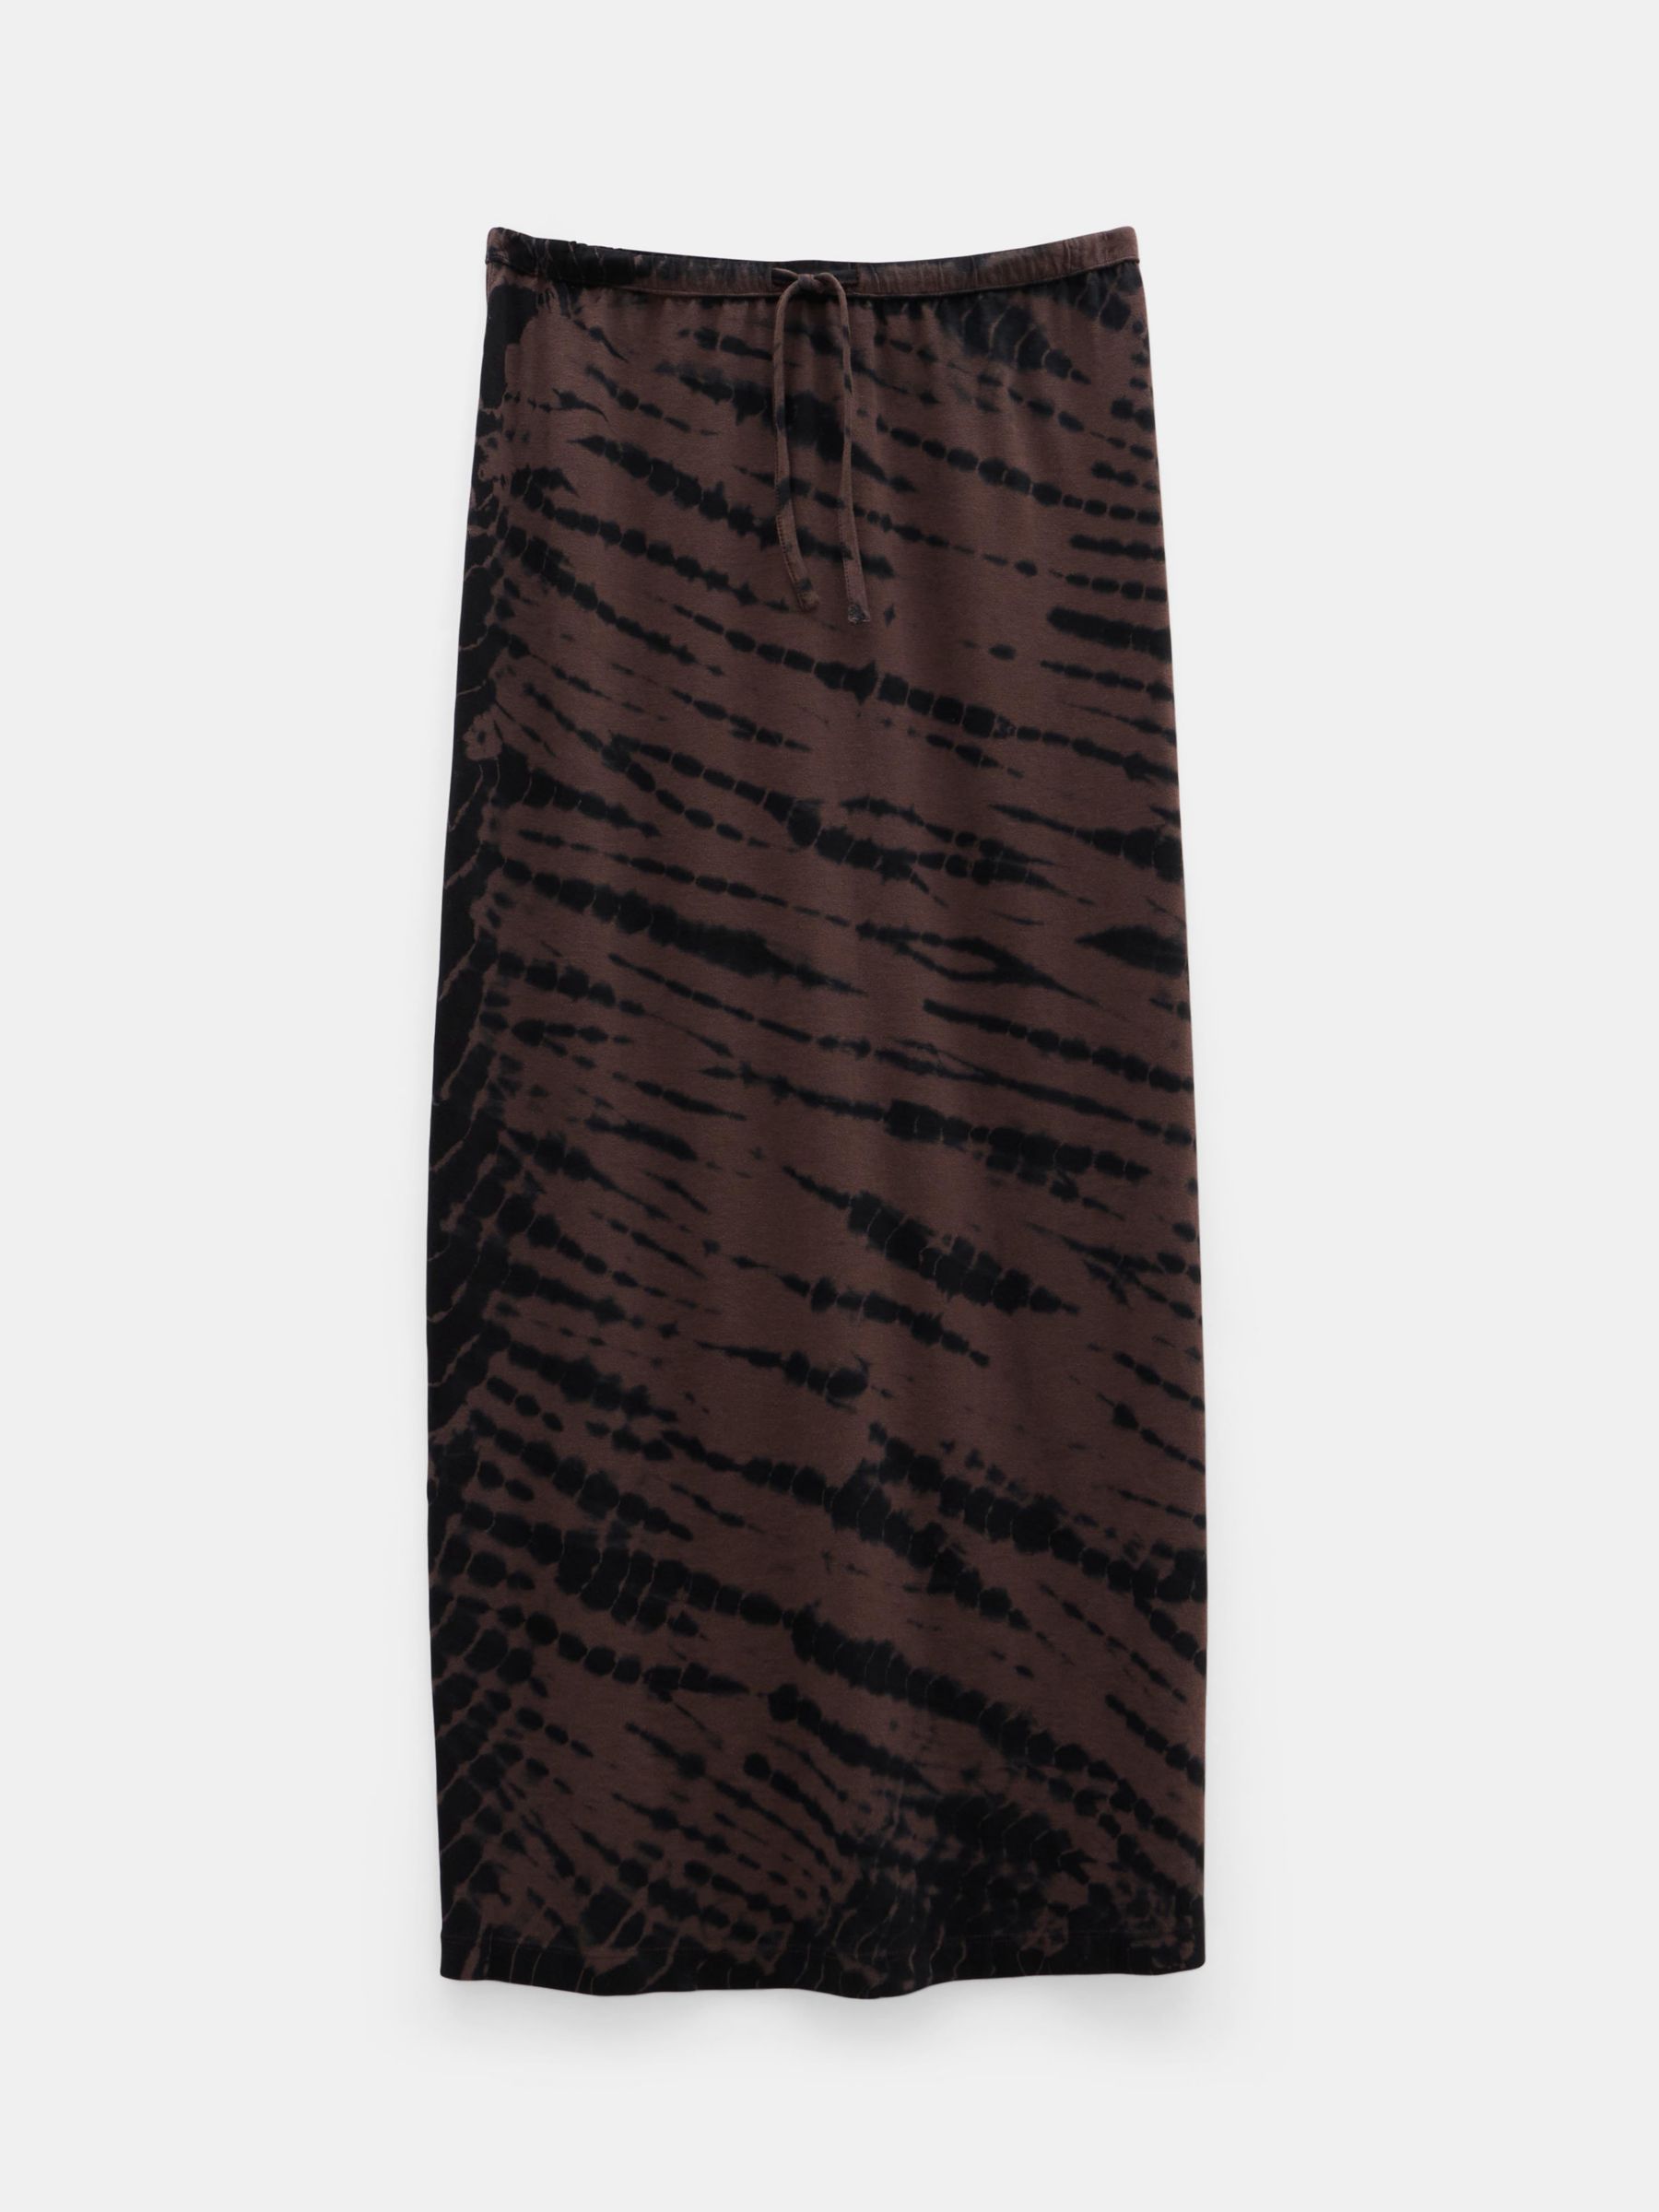 HUSH Zeena Diagonal Tie Dye Maxi Skirt, Brown/Black, 10